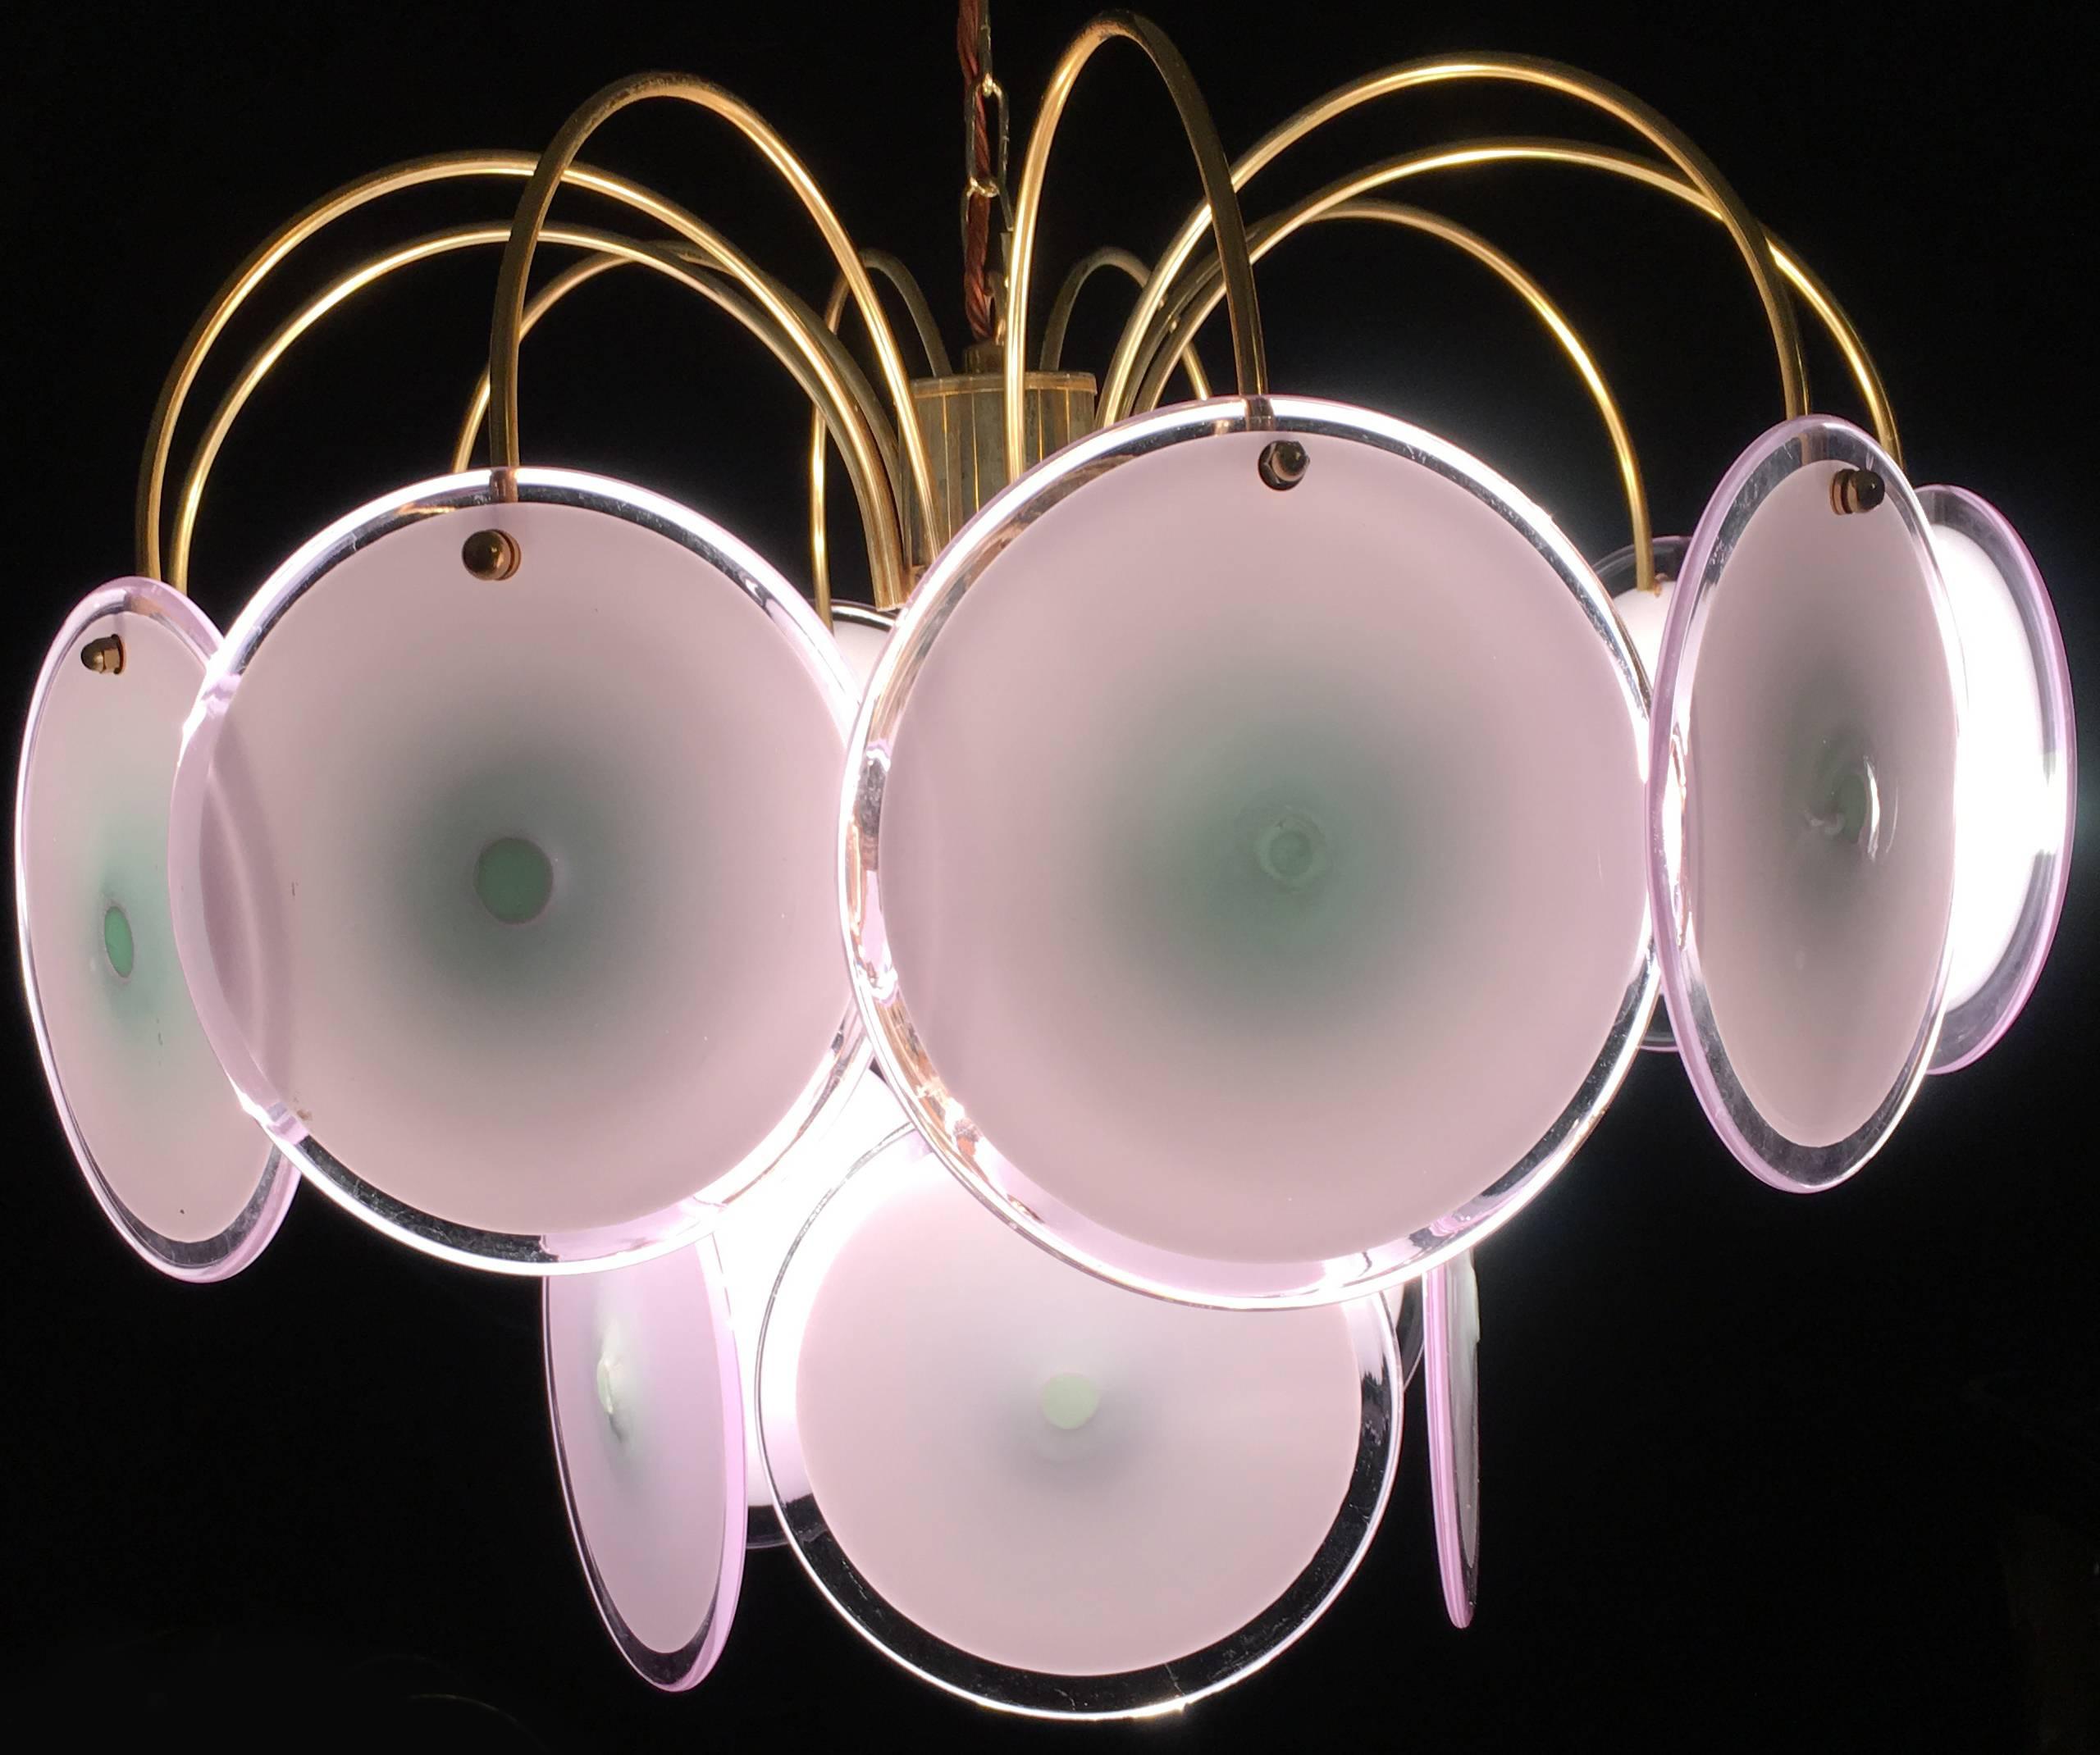 15 Murano discs for each chandelier mounted on two levels: Ten + five amethyst glass handblown. Lights five + one.